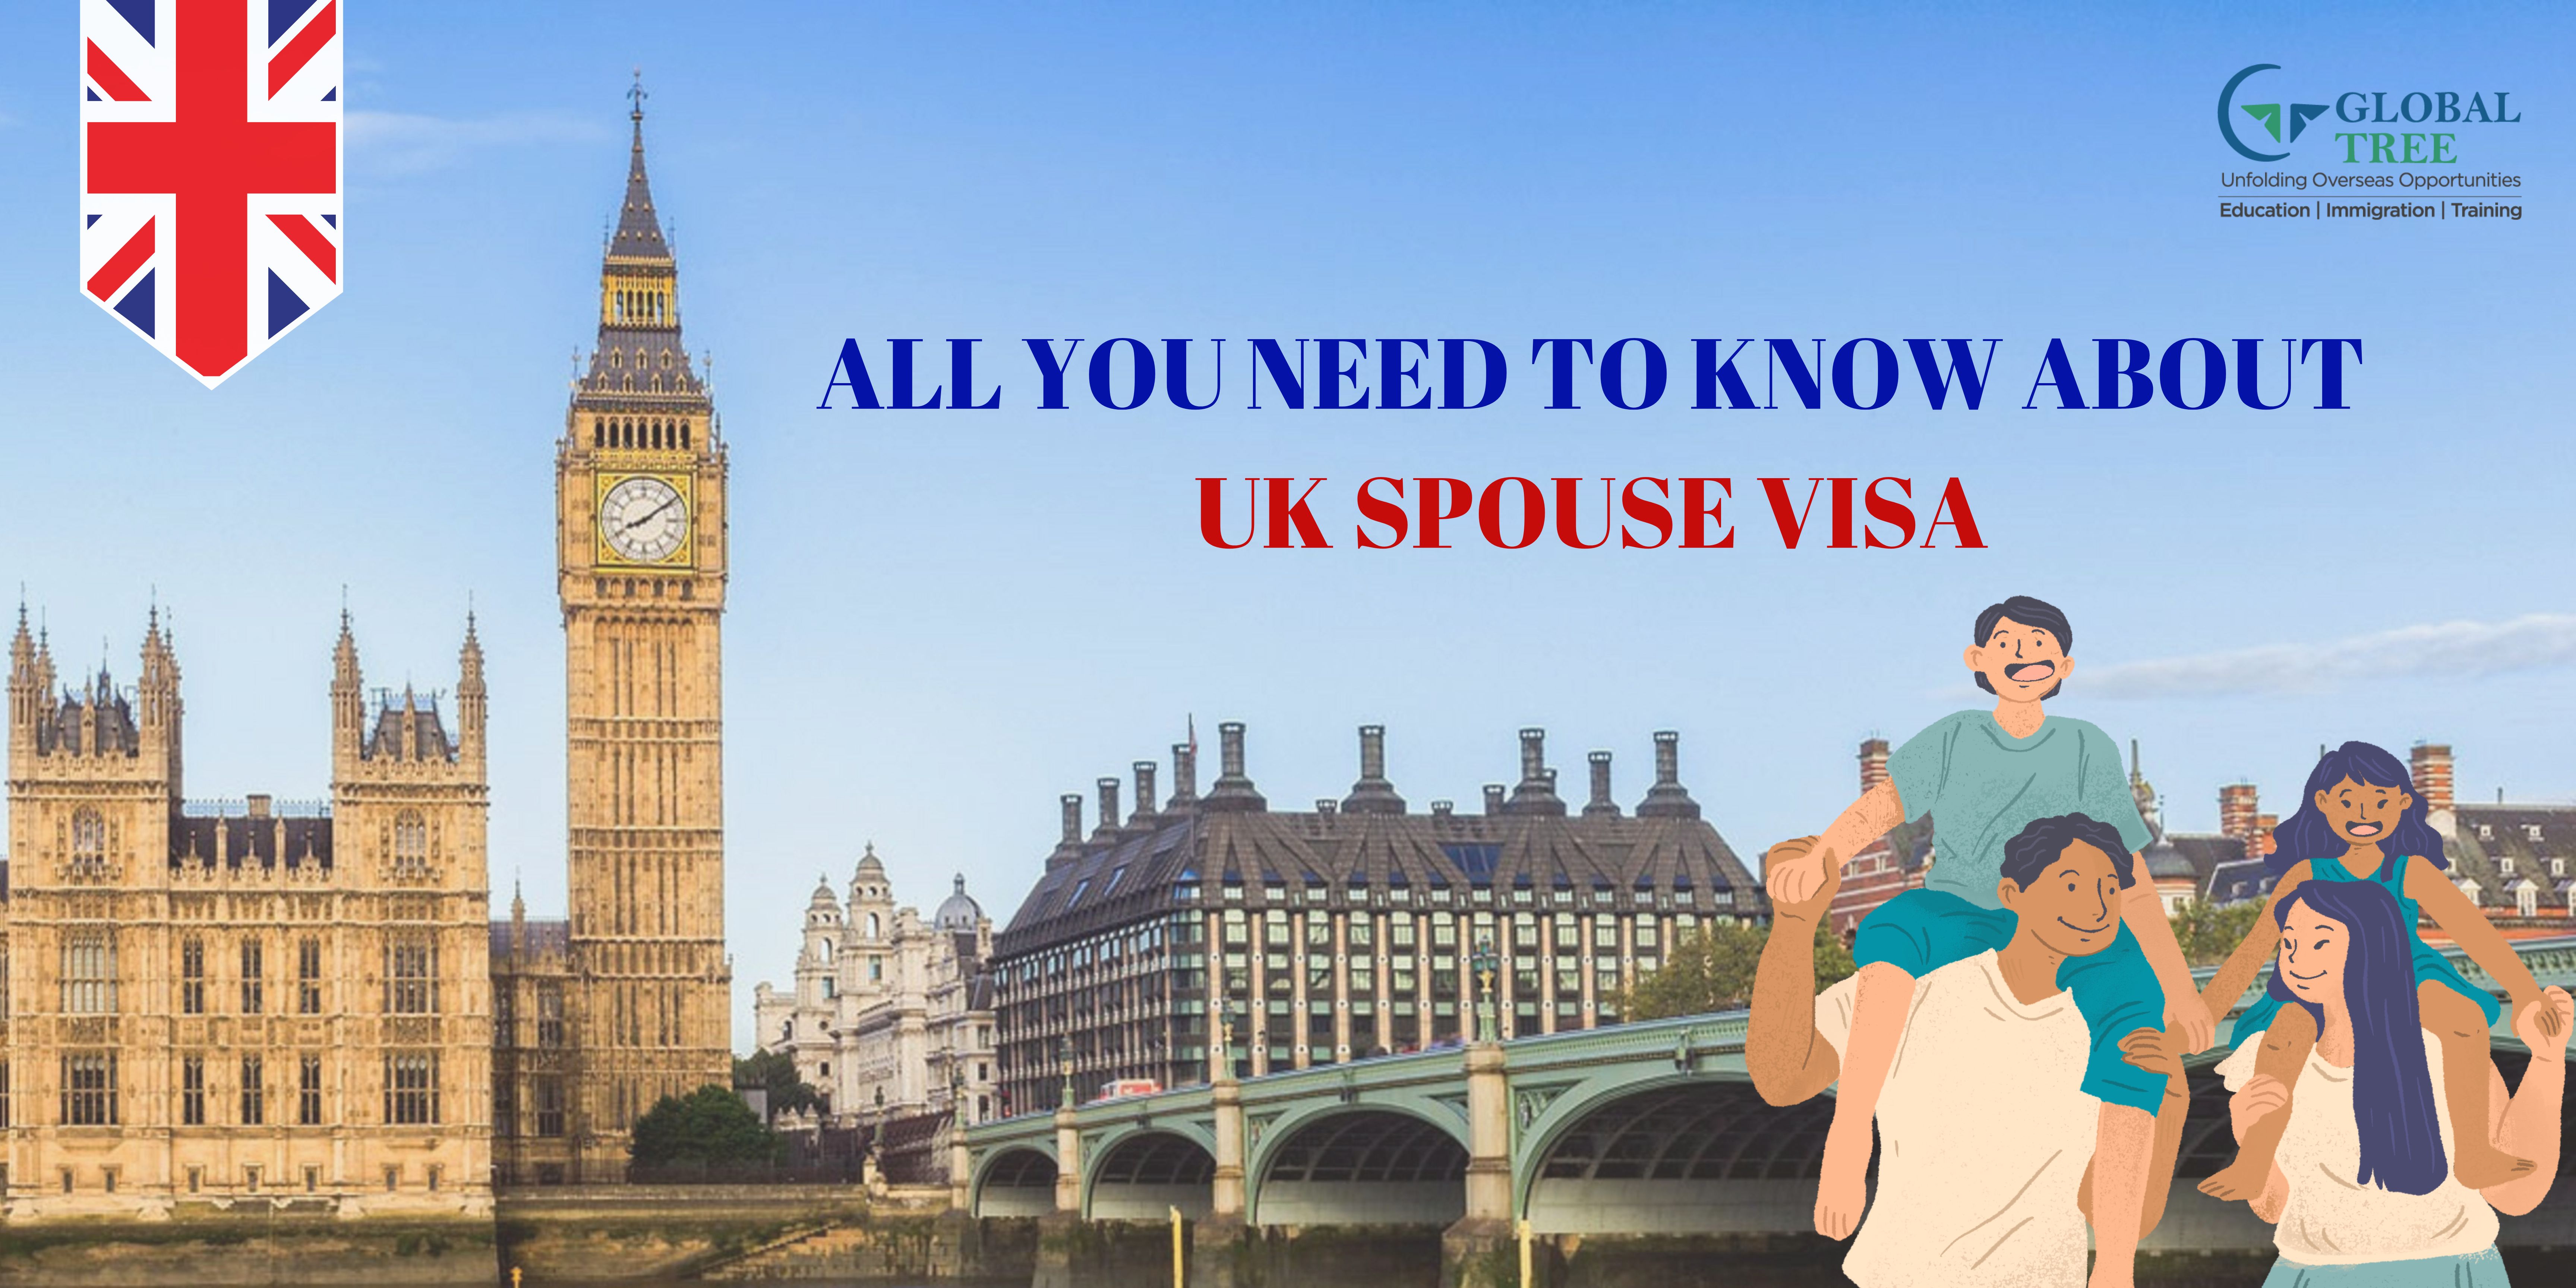 spouse visa uk travel europe